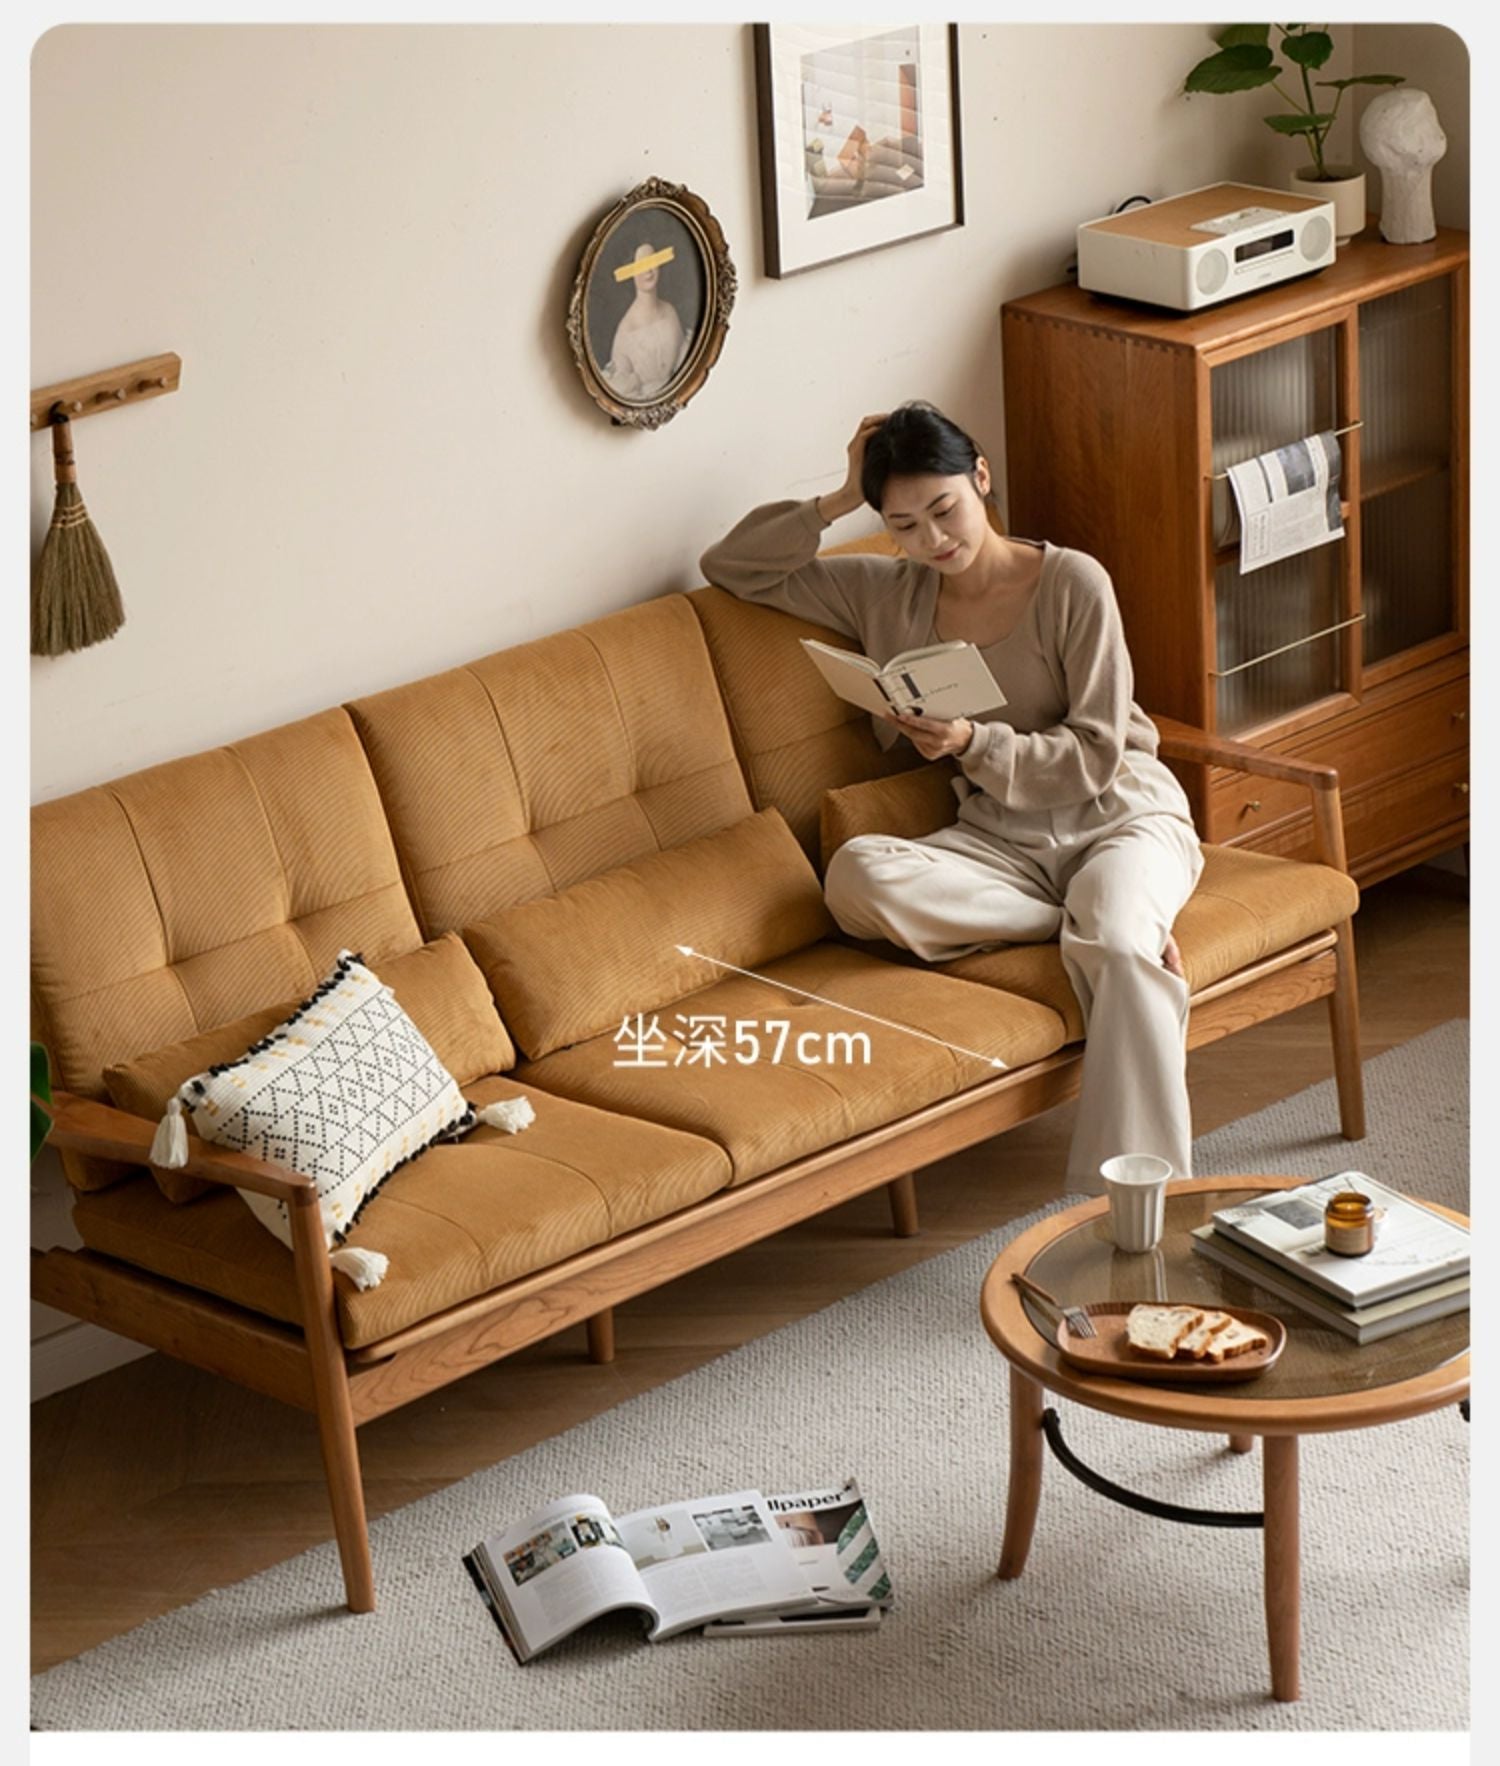 Oak Solid Wood rattan Vintage dual-purpose Sofa"